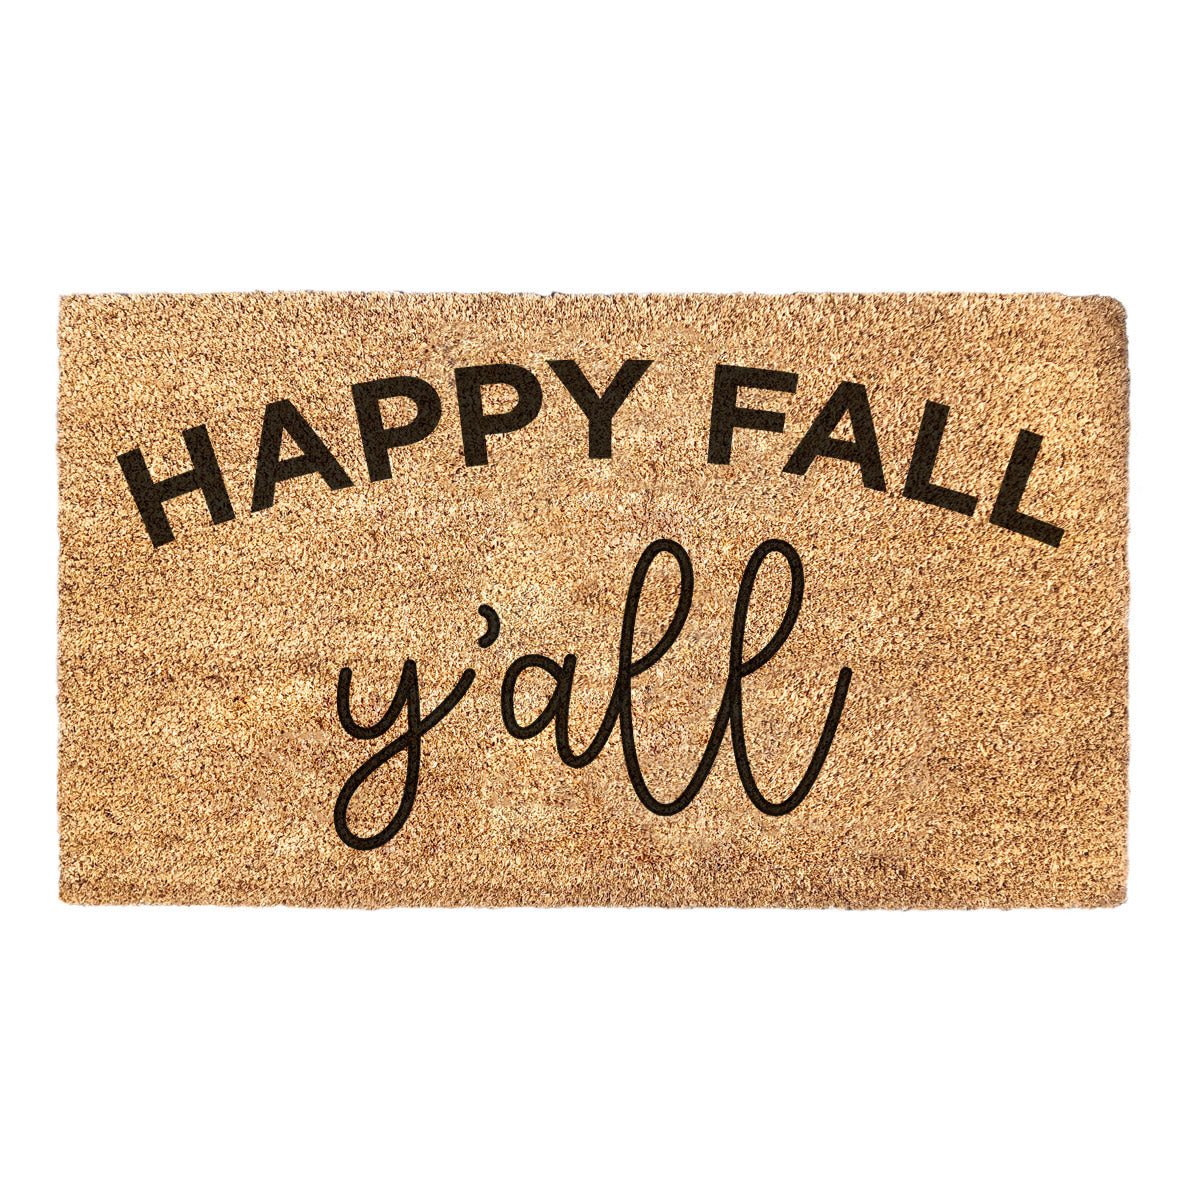 Happy Fall Y'all - Fall Doormat